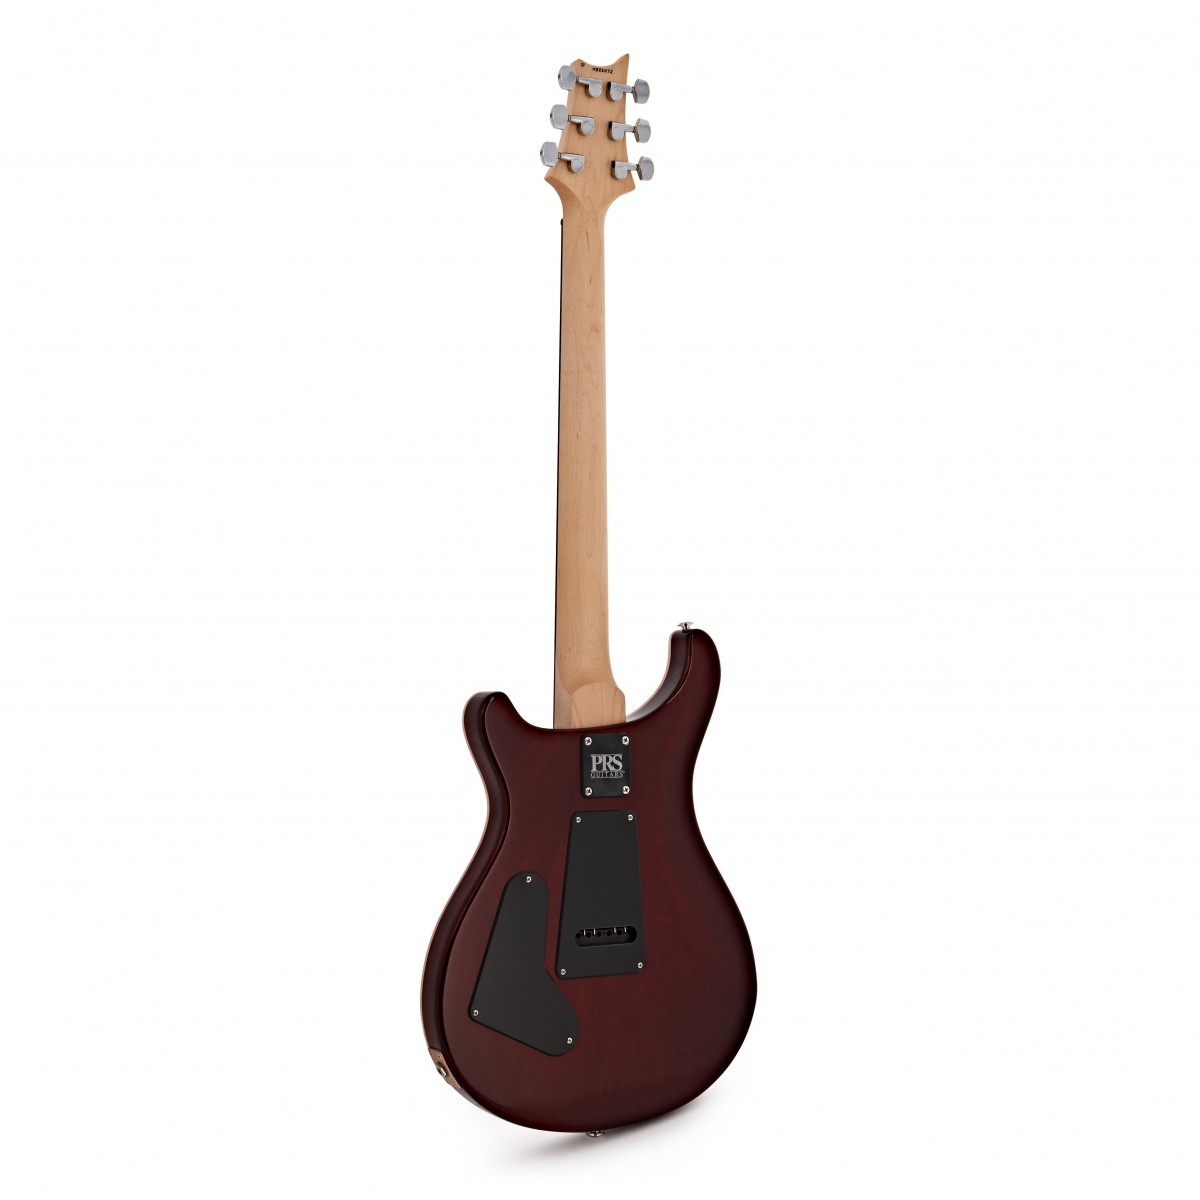 Prs Ce 24 Bolt-on Usa Hh Trem Rw - Fire Red Burst - Guitarra eléctrica de doble corte. - Variation 1